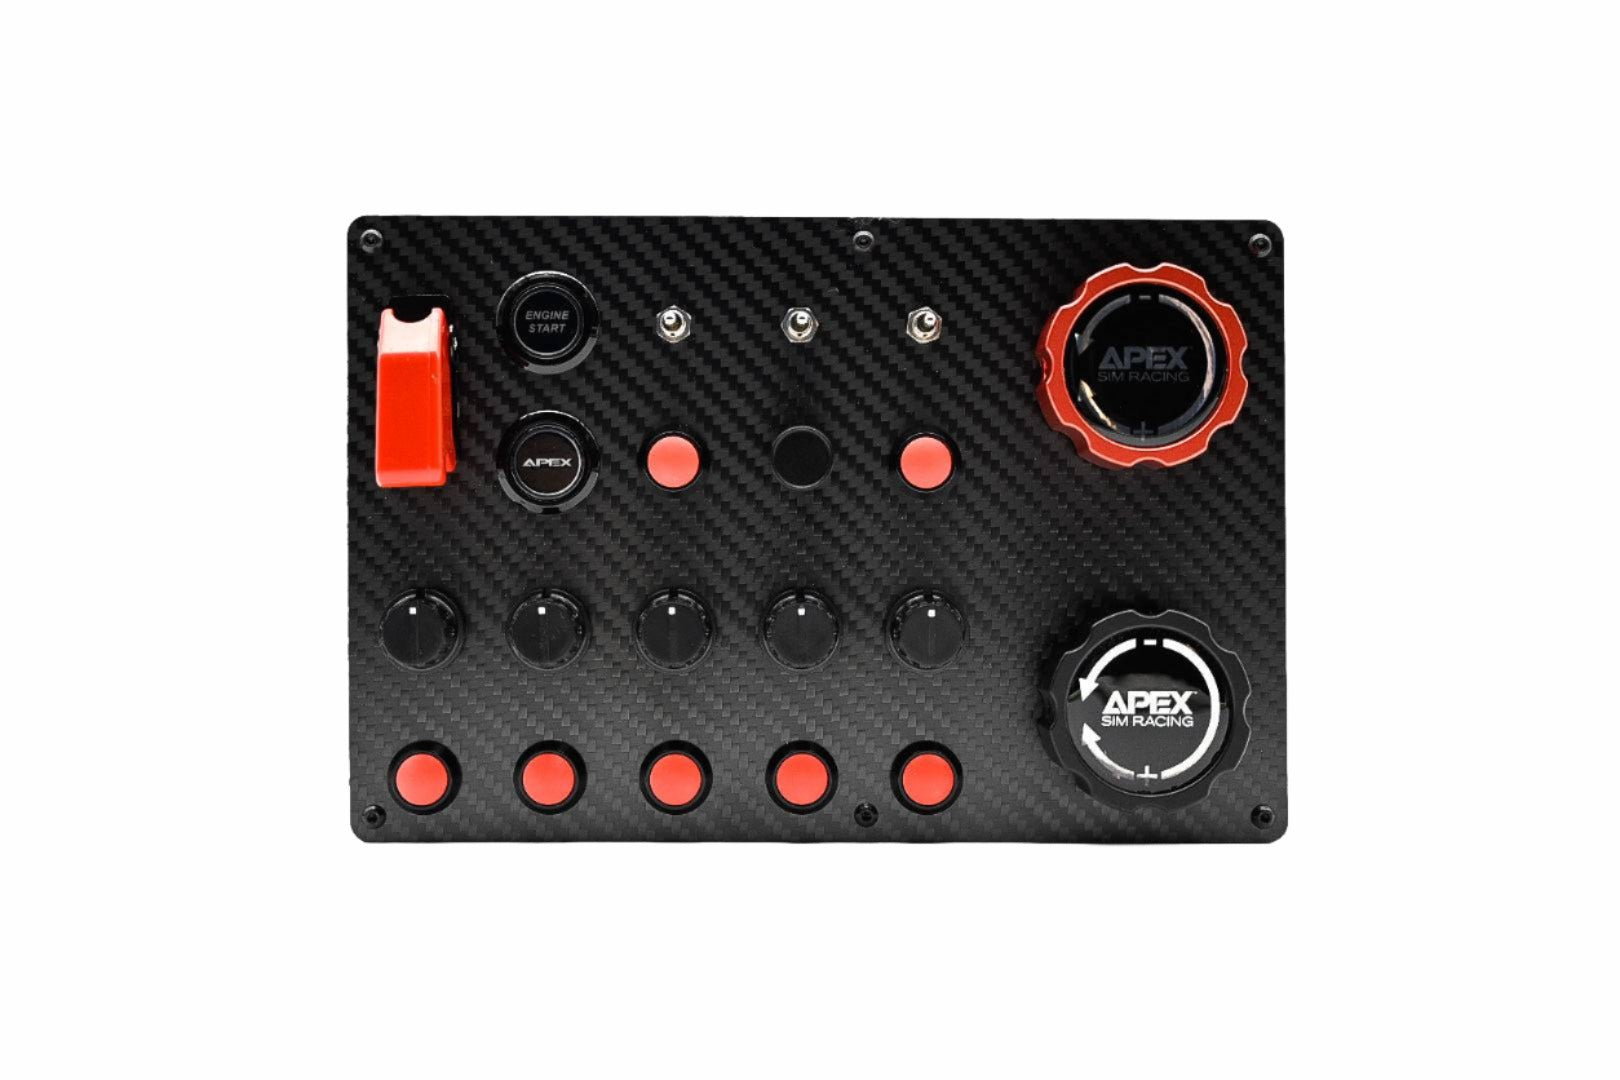 Downforce Button Box  Apex Sim Racing - Sim Racing Products